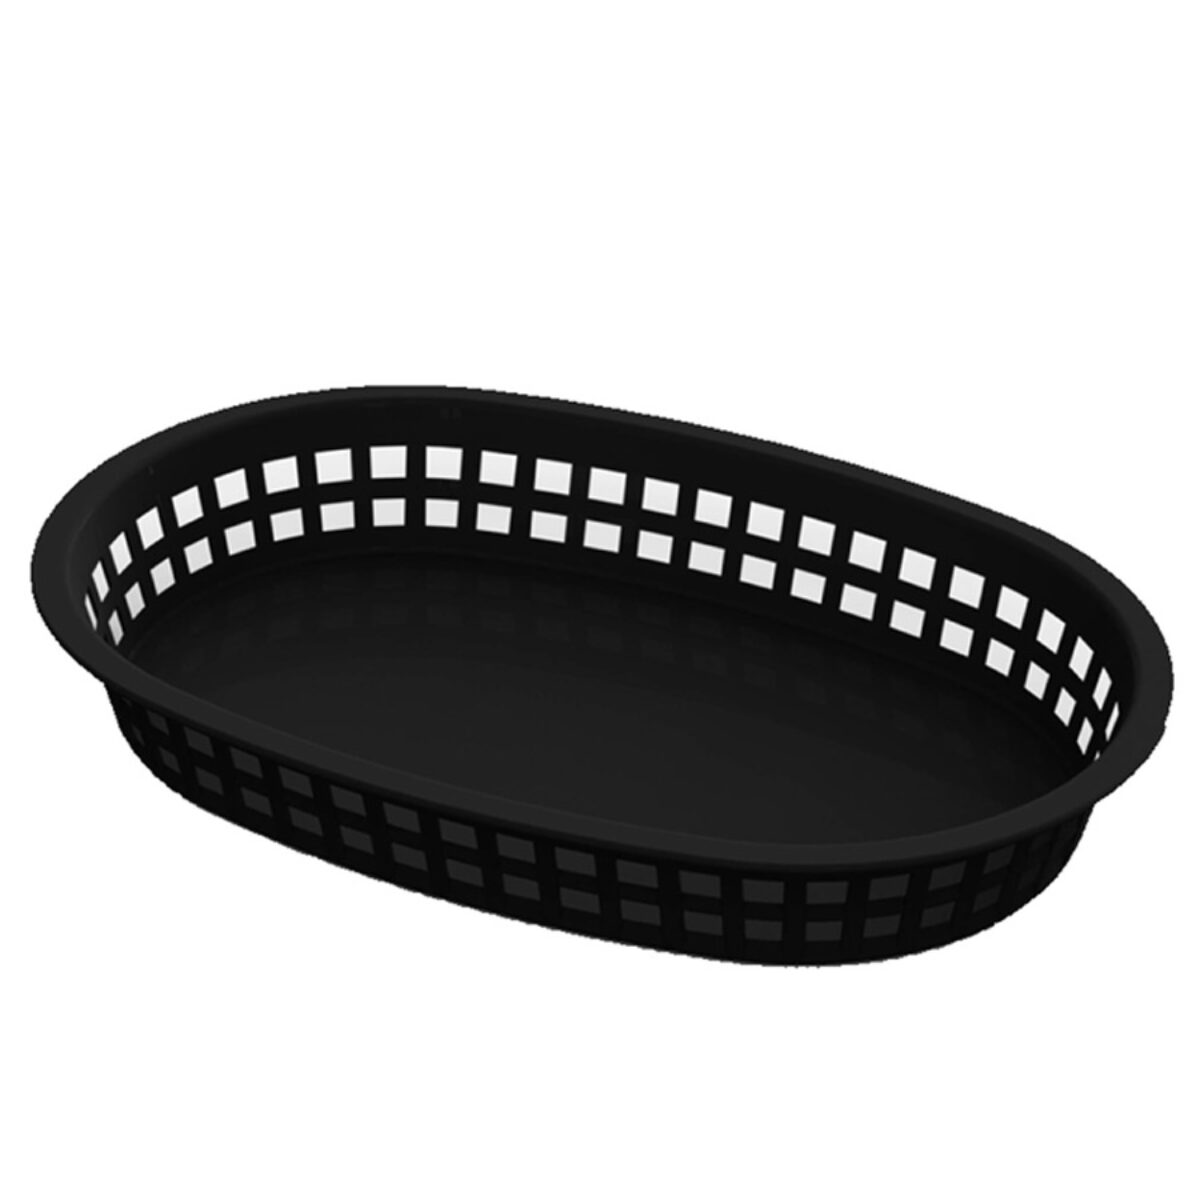 https://doyleshamrock.com/main/wp-content/uploads/schema-and-structured-data-for-wp/black-oblong-food-serving-basket-1200x1200.jpg